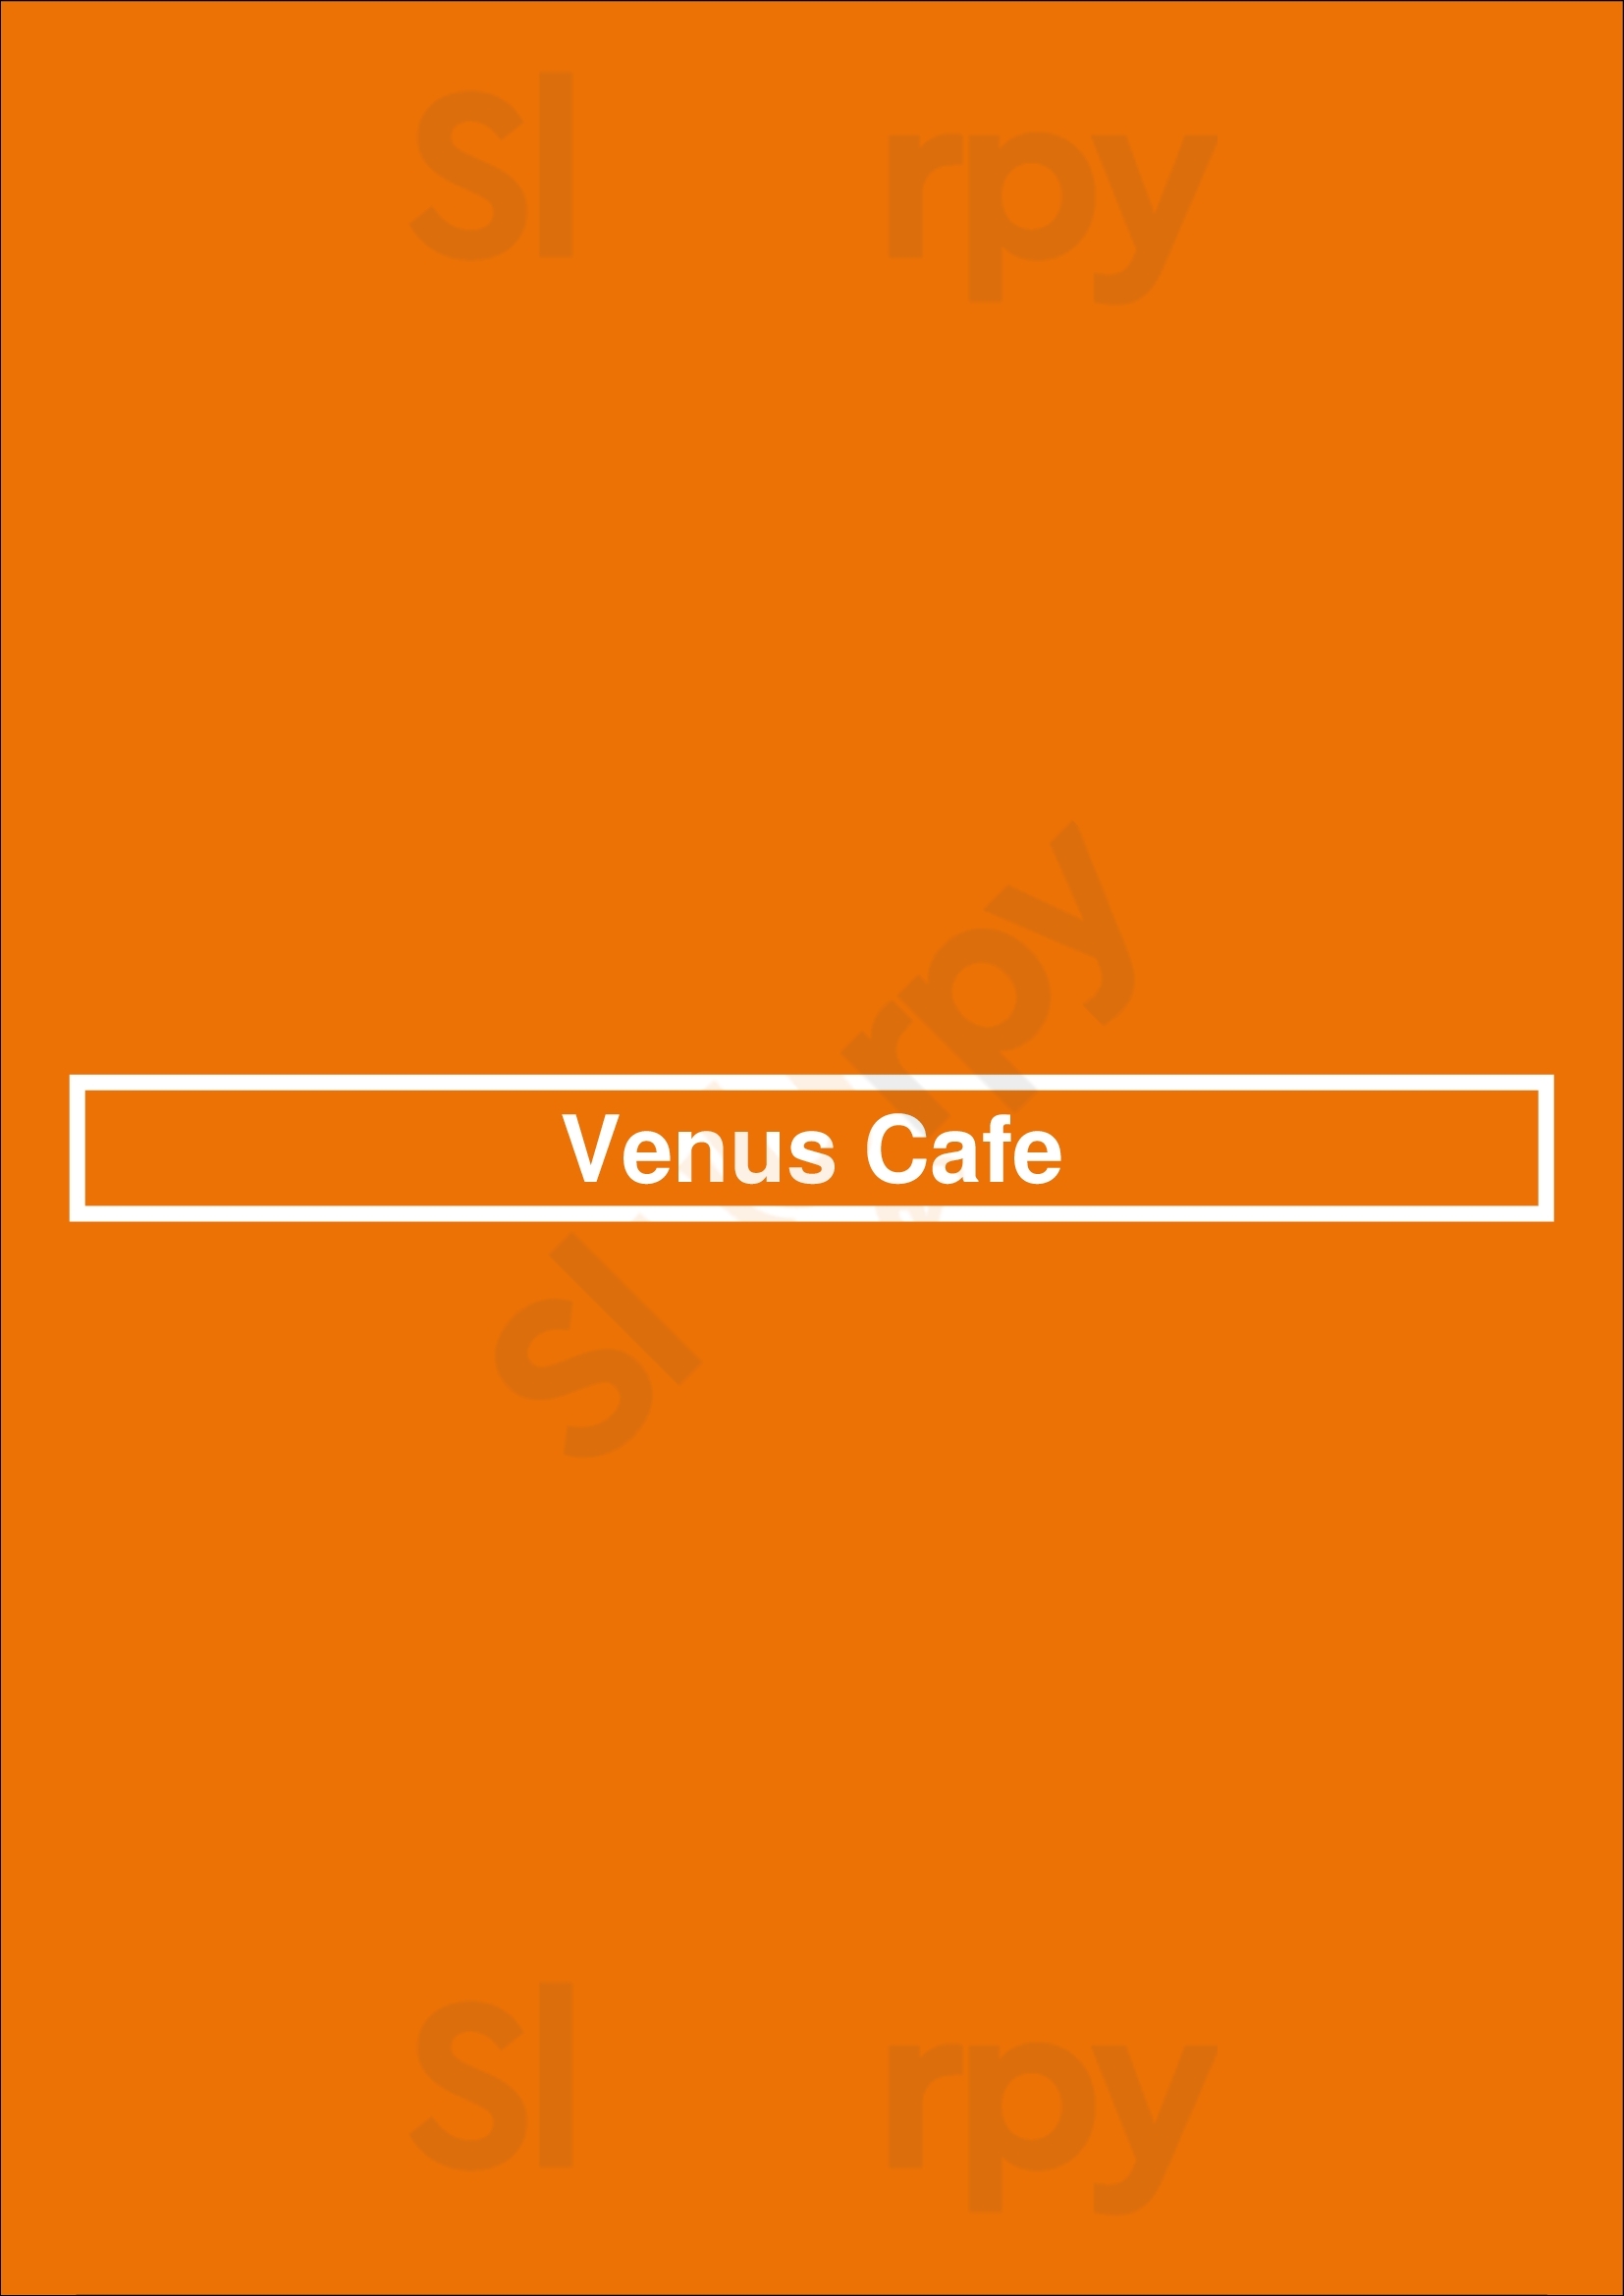 Venus Cafe Newark Menu - 1